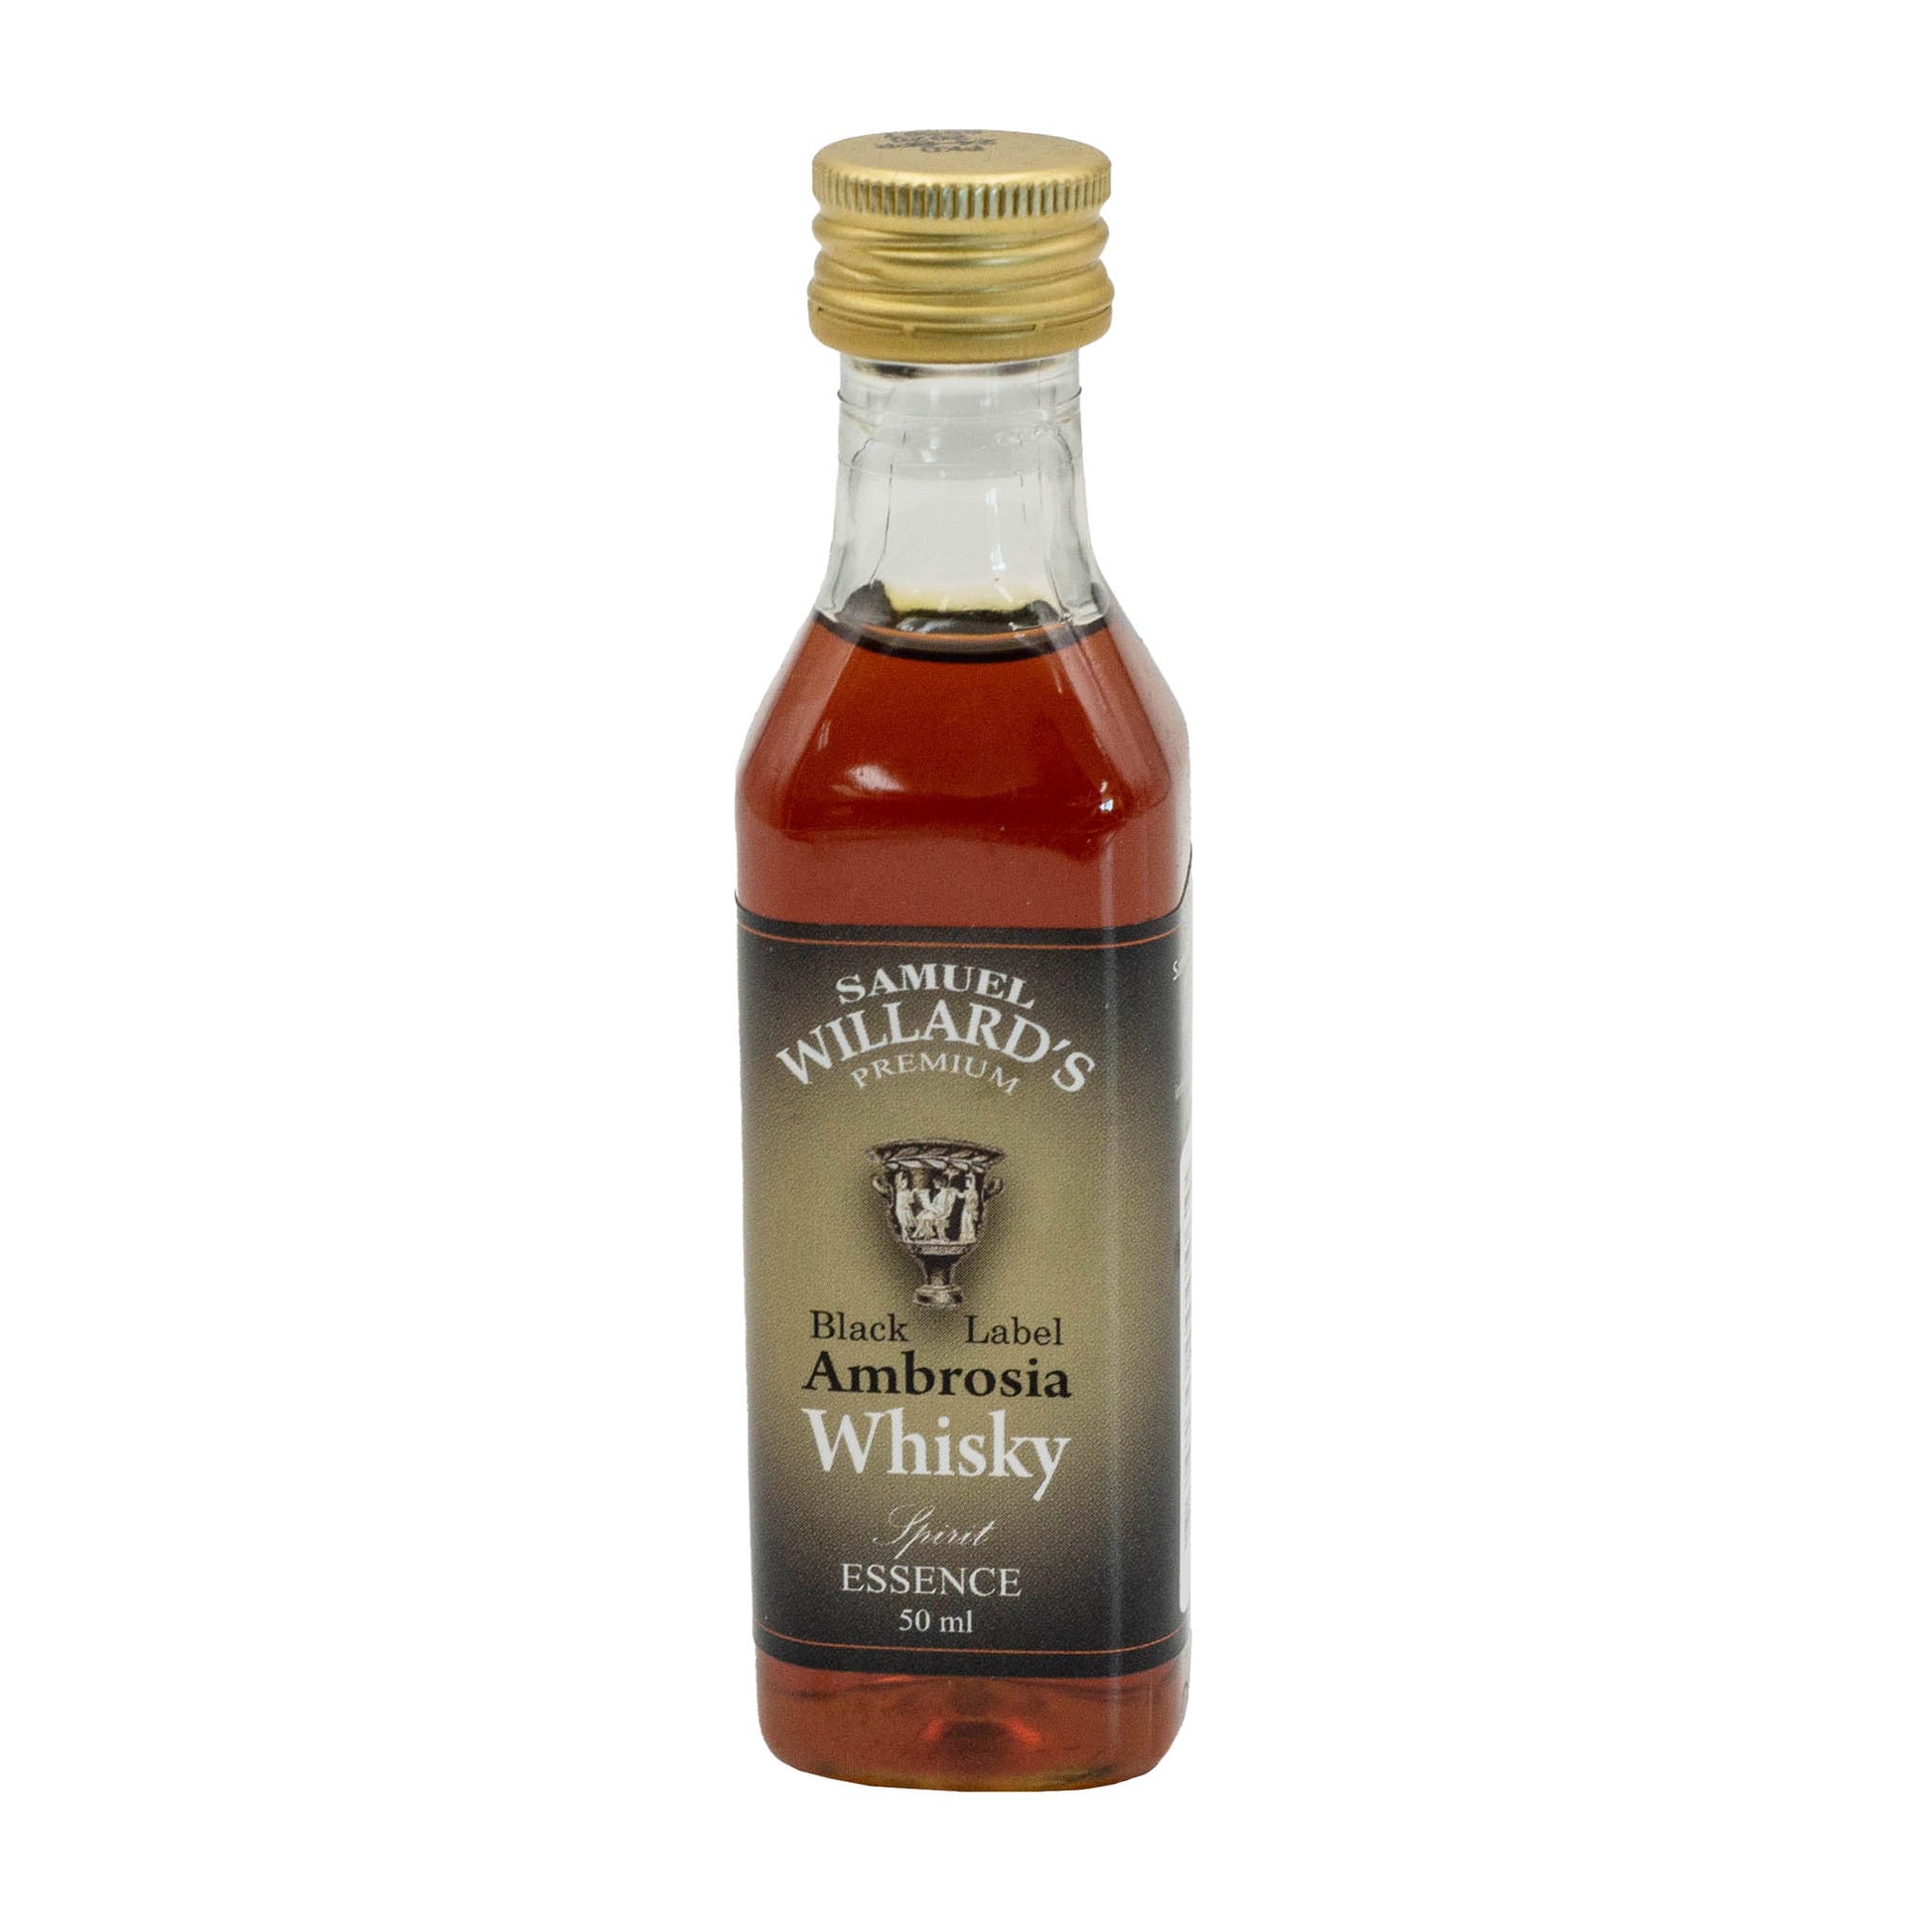 Samuel Willards Premium Black Label Ambrosia Whiskey essence. Makes 2250mL of finished product from each 50mL bottle